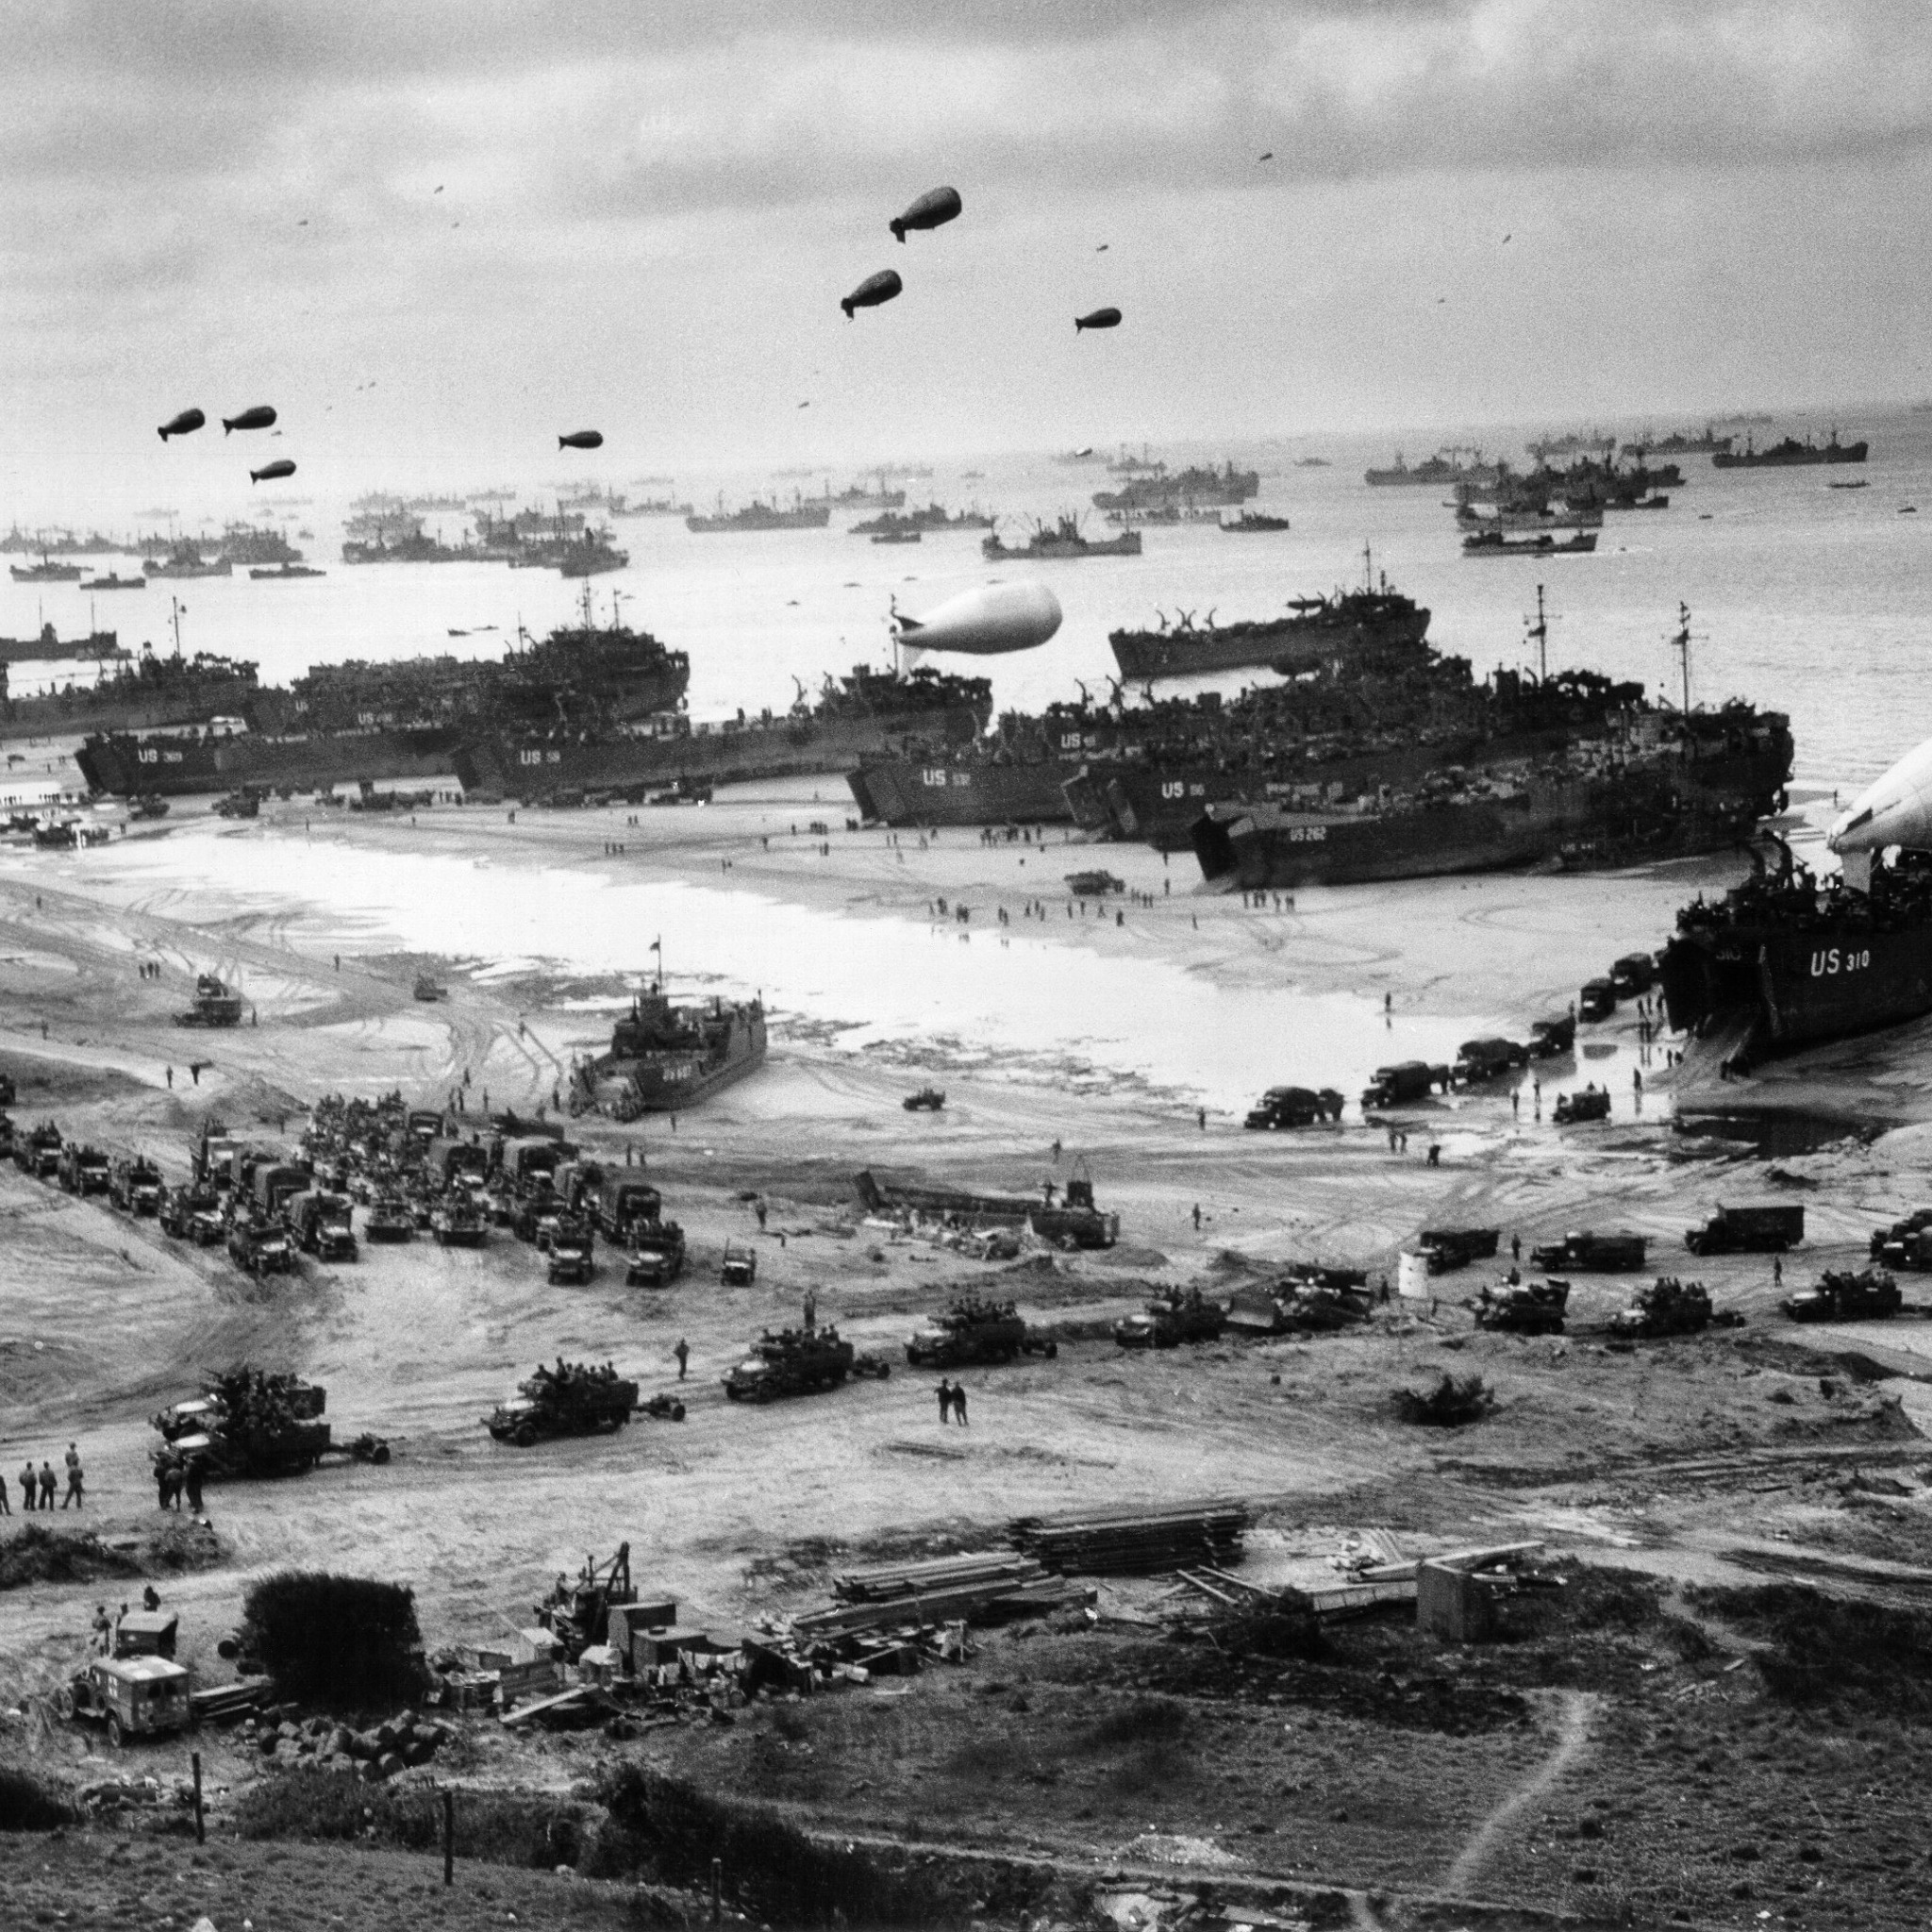 Эйзенхауэр высадка в нормандии. Битва в Нормандии 1944. Нормандия 6 июня 1944. Оверлорд высадка в Нормандии.